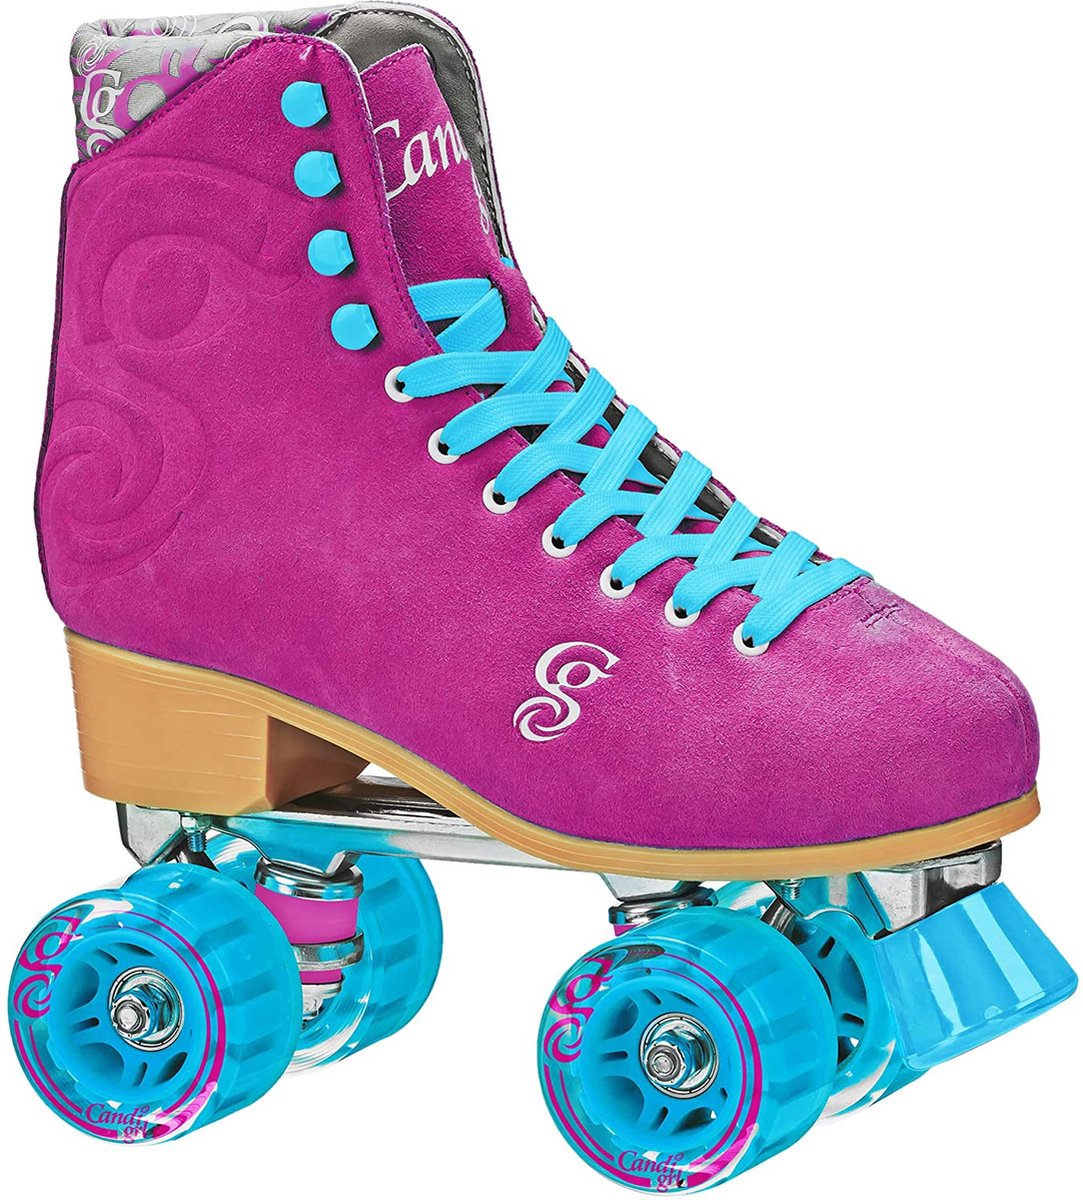 CANDI GIRL Carlin Rolschaatsen / Rollerskates - Aluminium Frame - Alu  Trucks - Berry - Dames - Maat 41,5 (binnenzooltje 25 cm) -  schaatsenenskeelers.nl